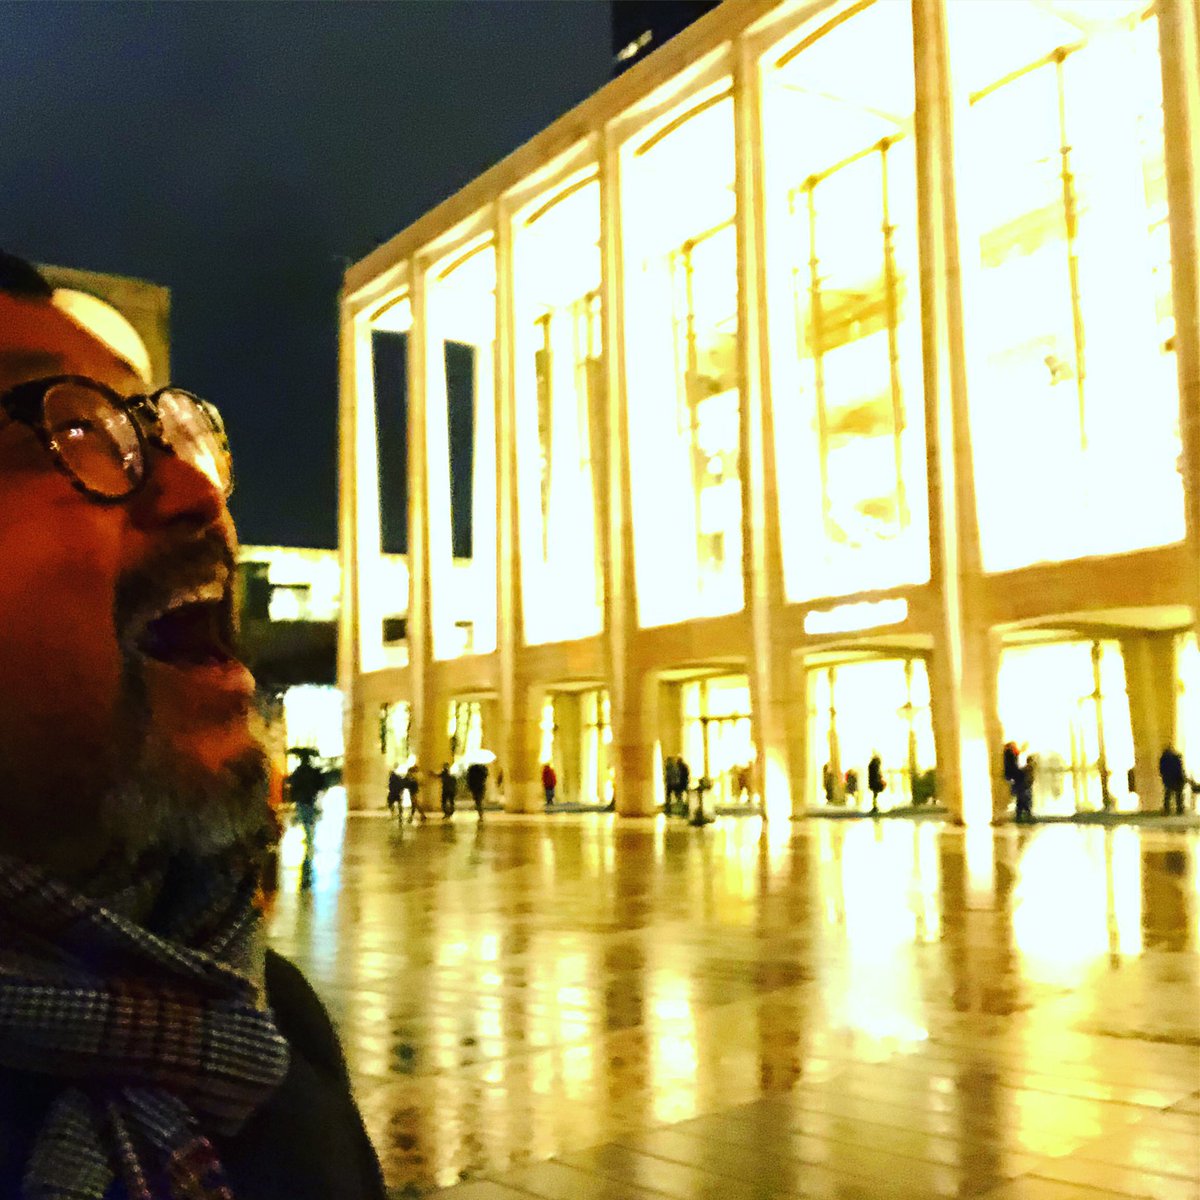 #messiah #newyorkphilharmonic #lincolncenter #davidgeffenhall 
Handel’s Messiah! Awesome!